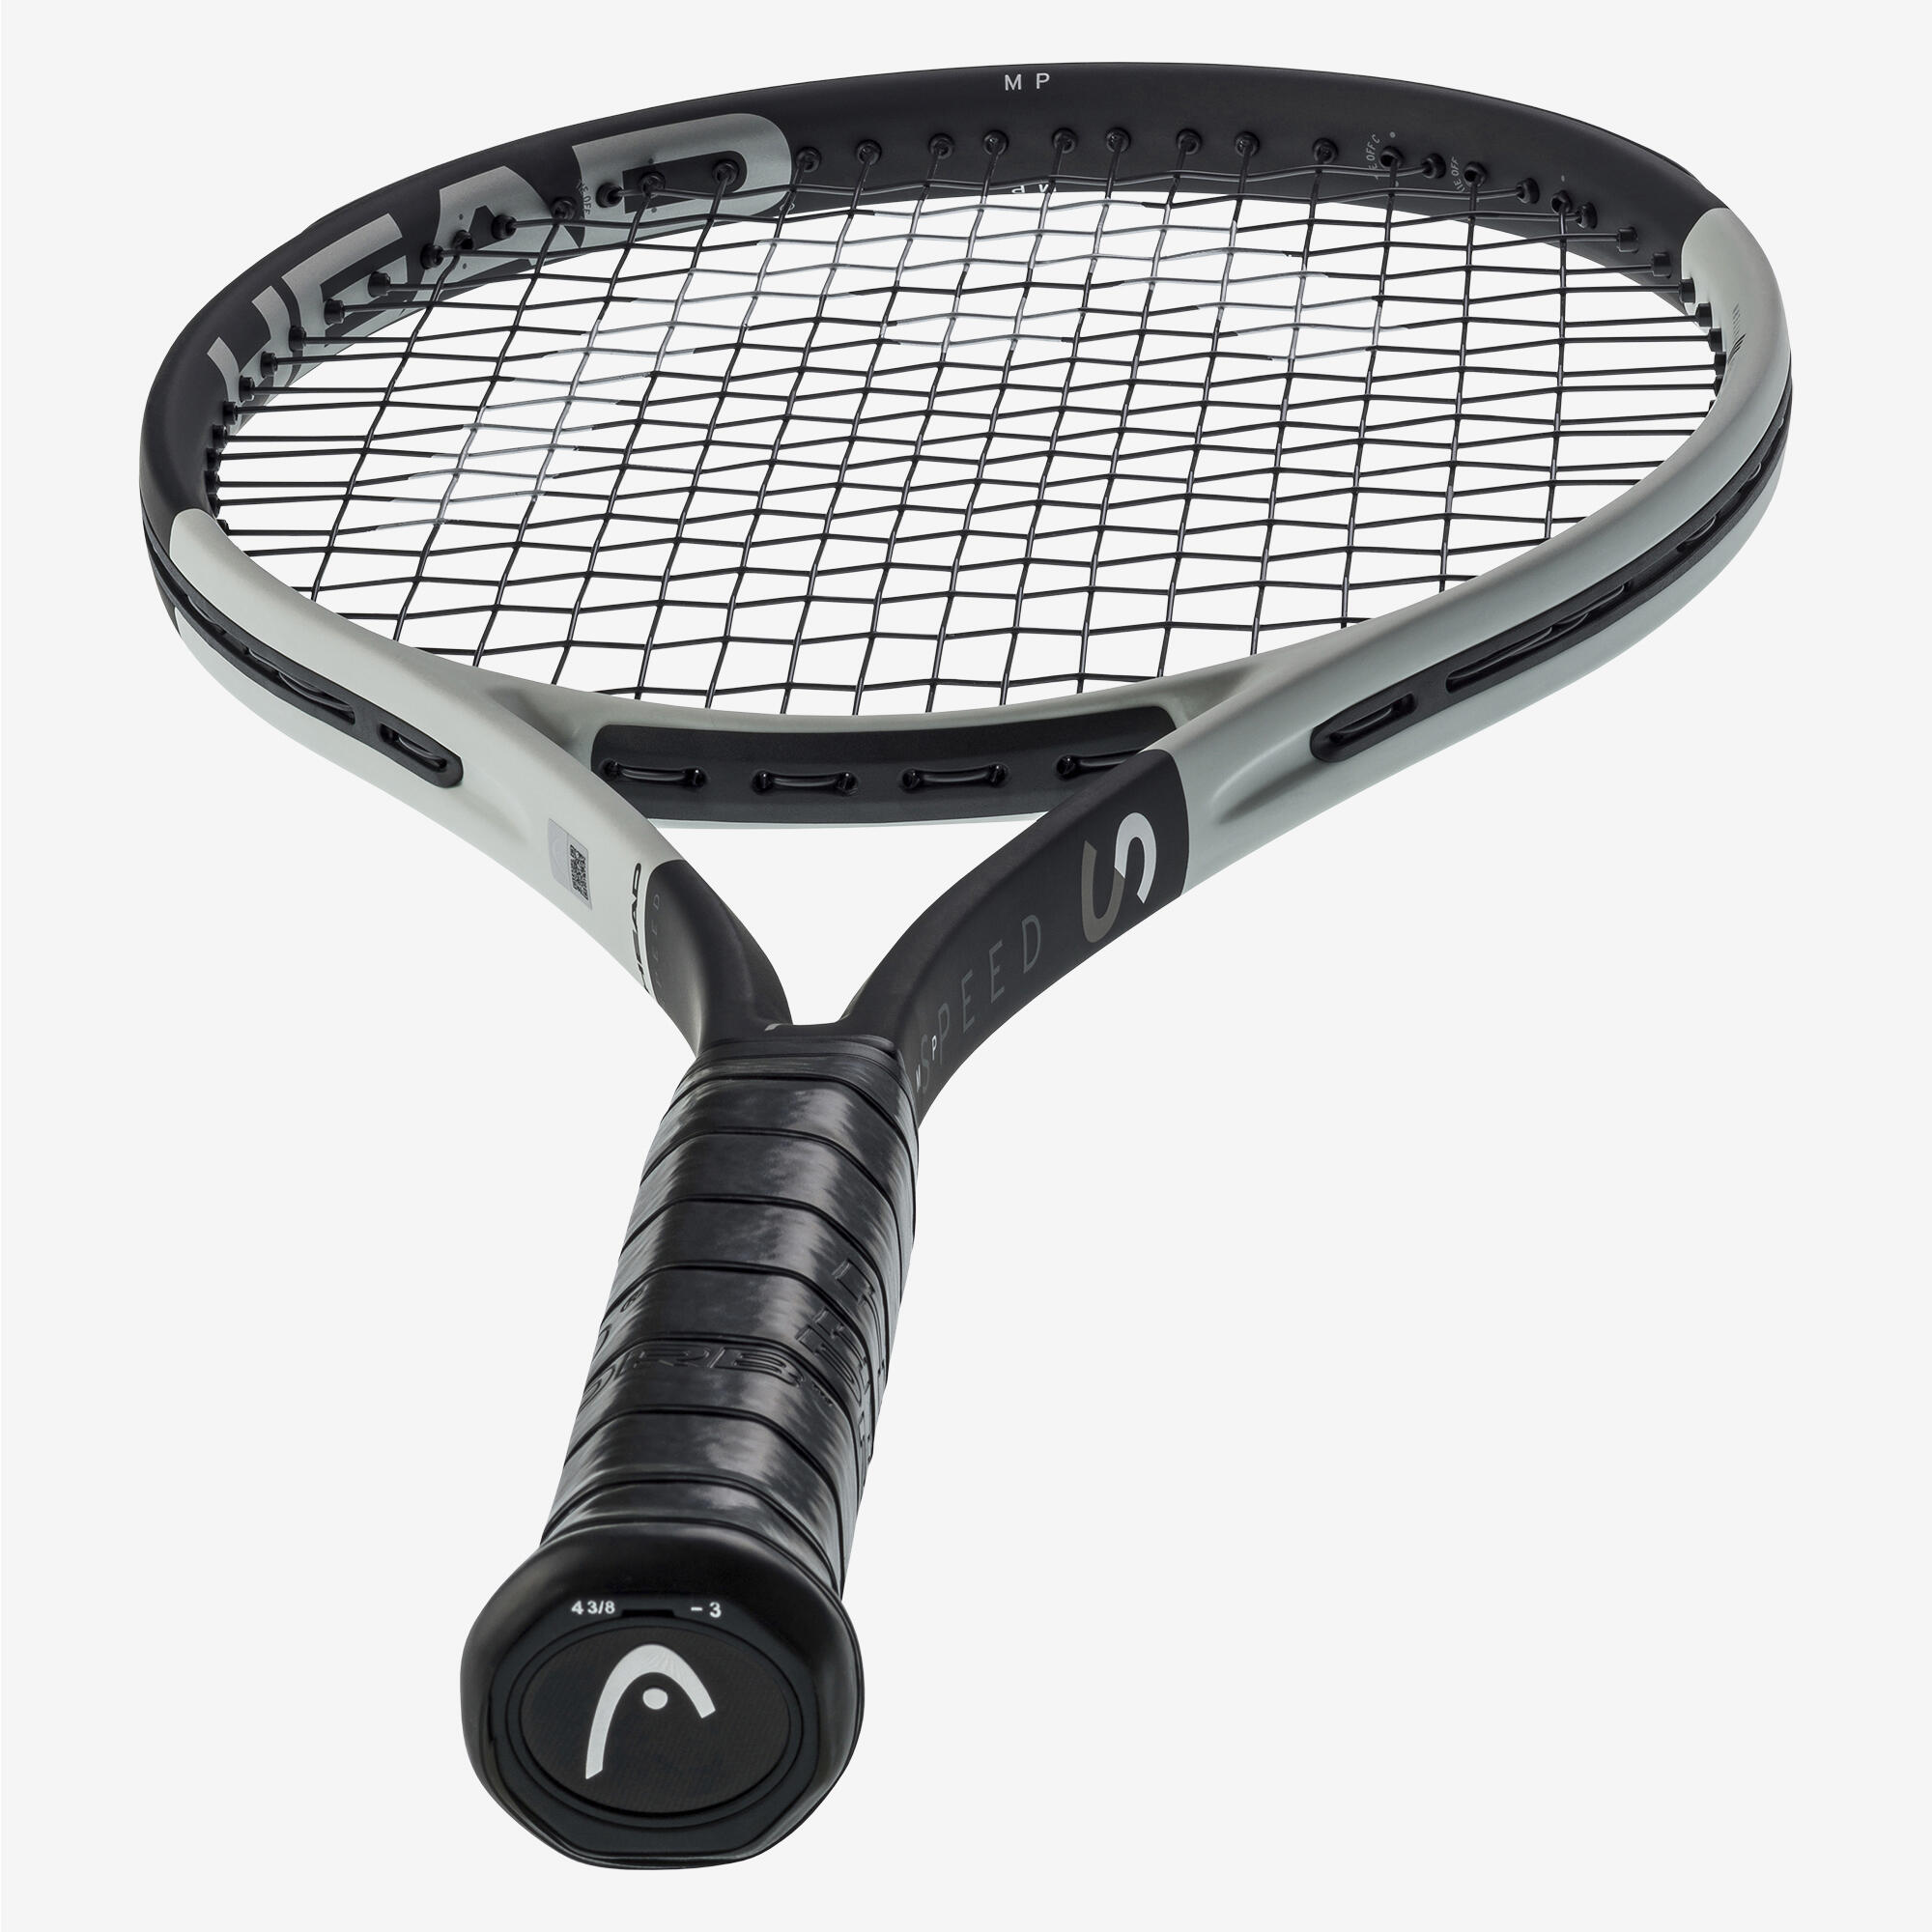 Head Tennisschläger Damen/Herren - Auxetic Speed MP 300 g 